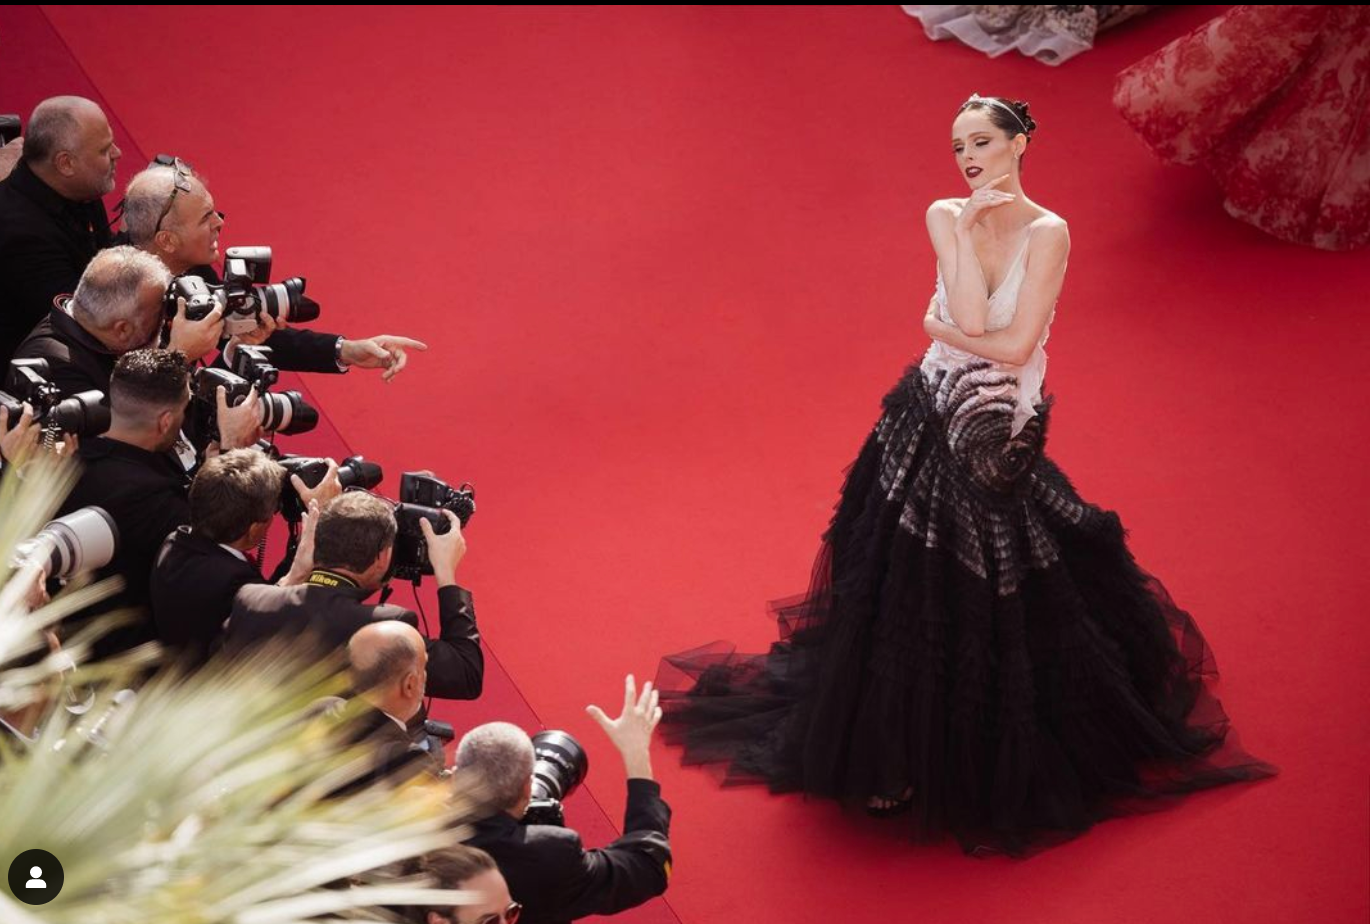 Cannes 2022: Deepika Padukone Looks Regal In Custom Louis Vuitton